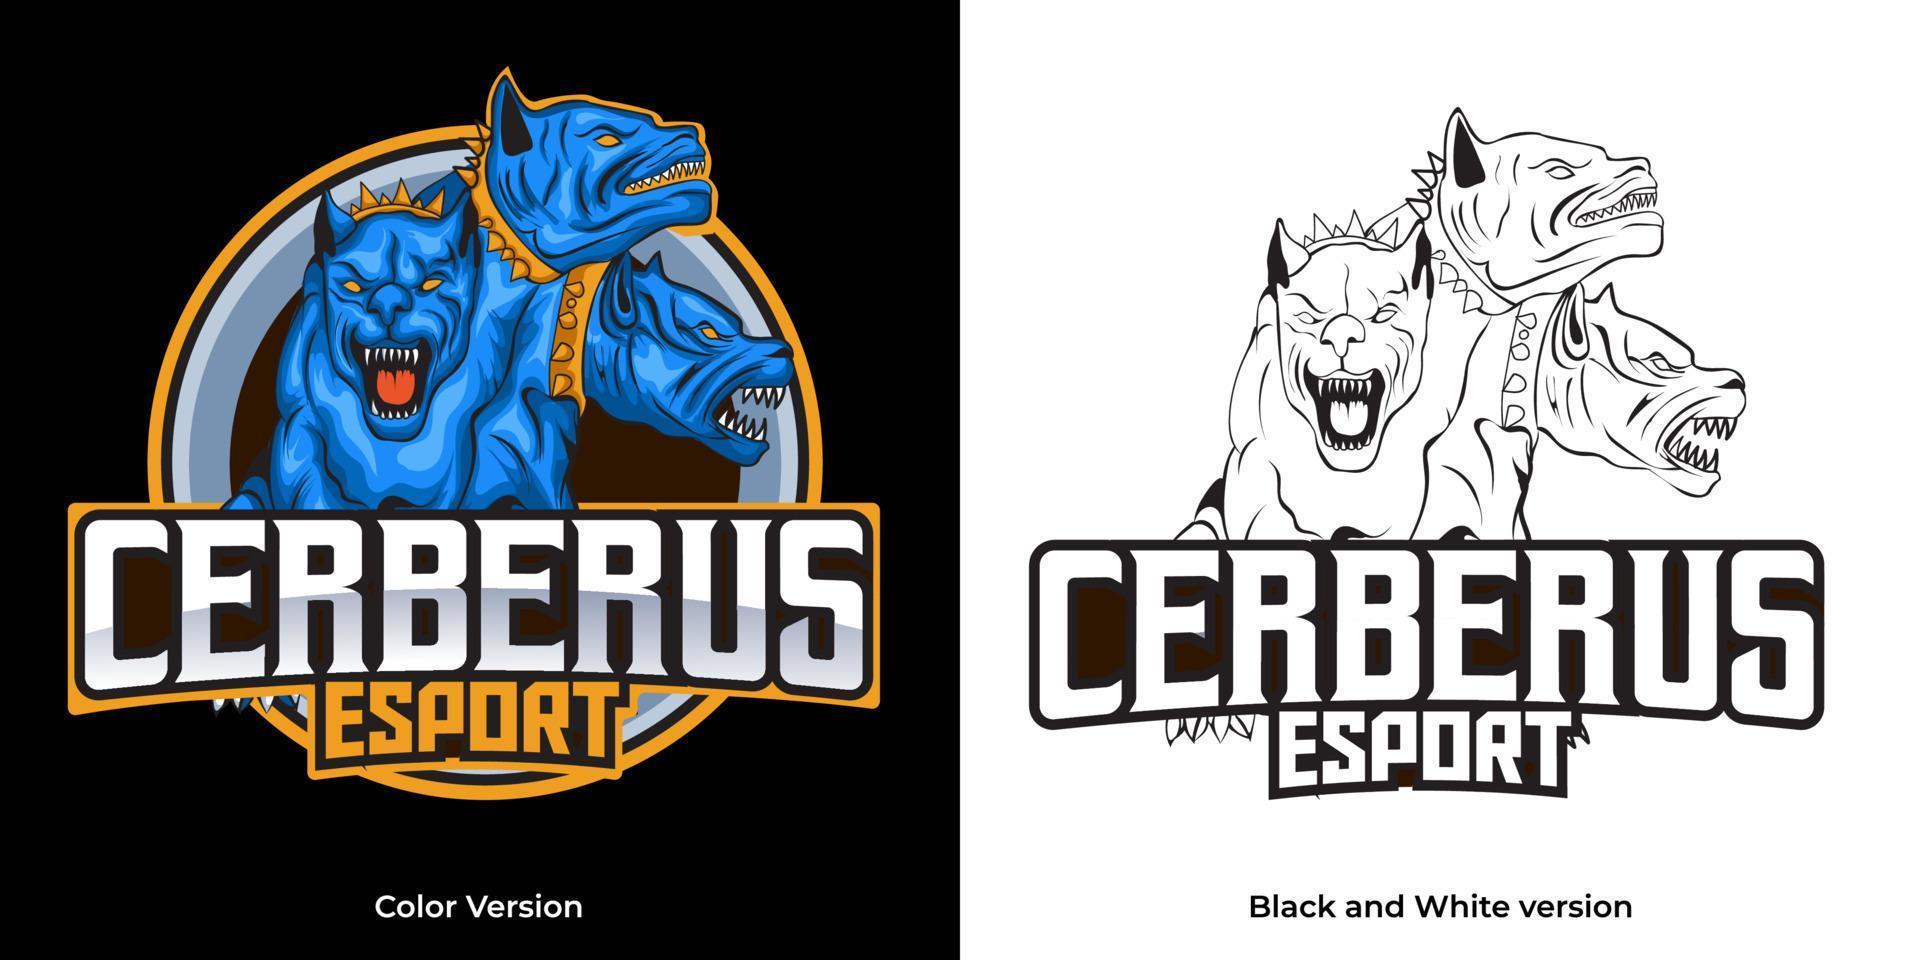 cerberus esport logo mascot design vector